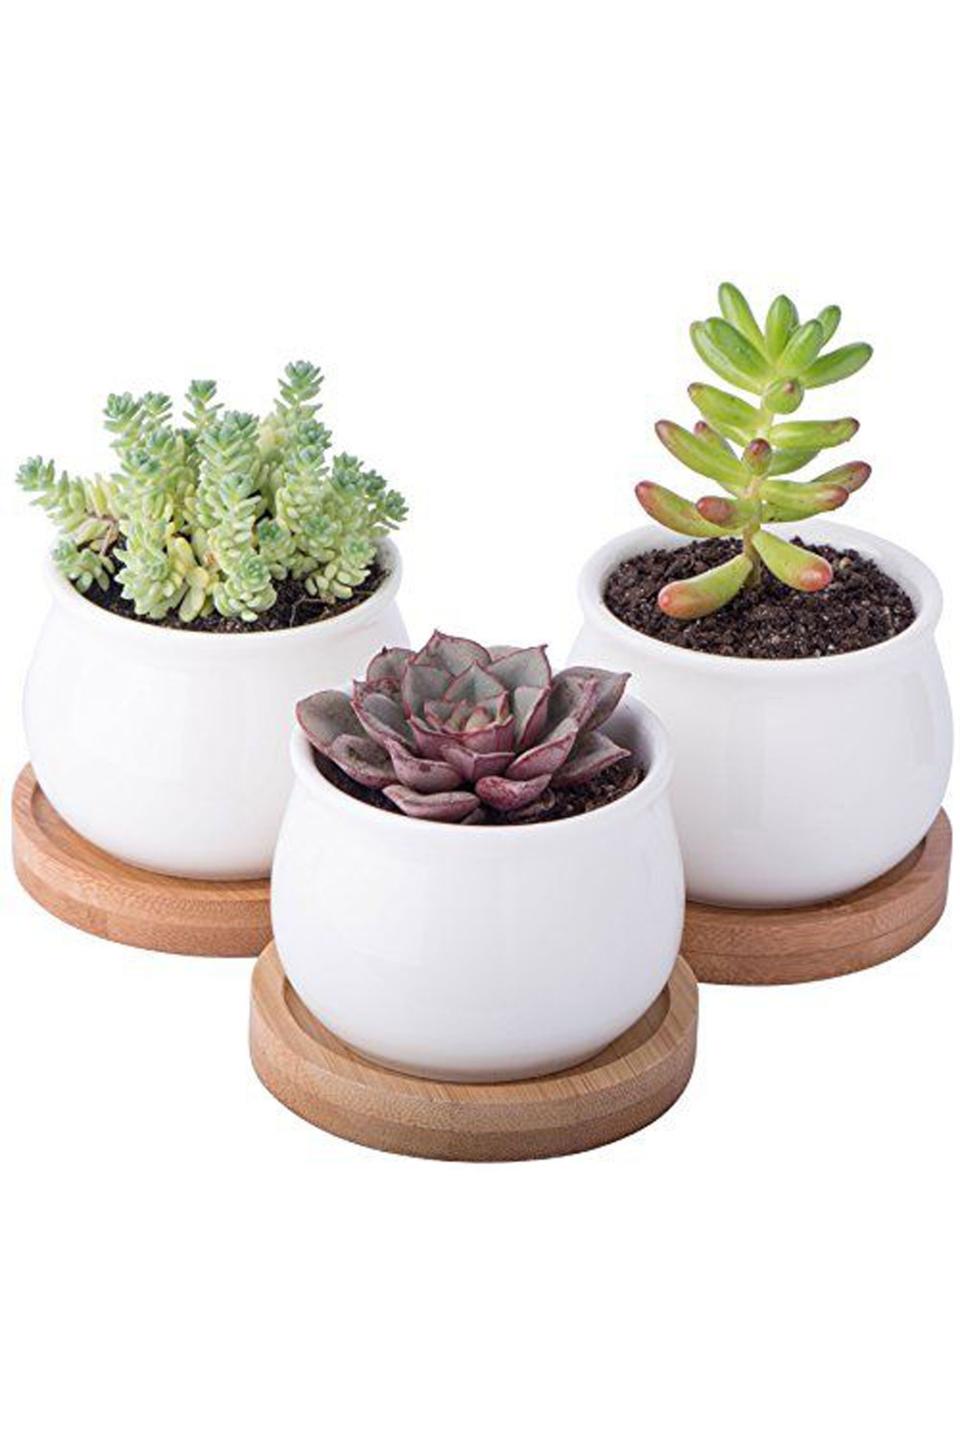 13) Mini White Ceramic Succulent Planter Pot Set